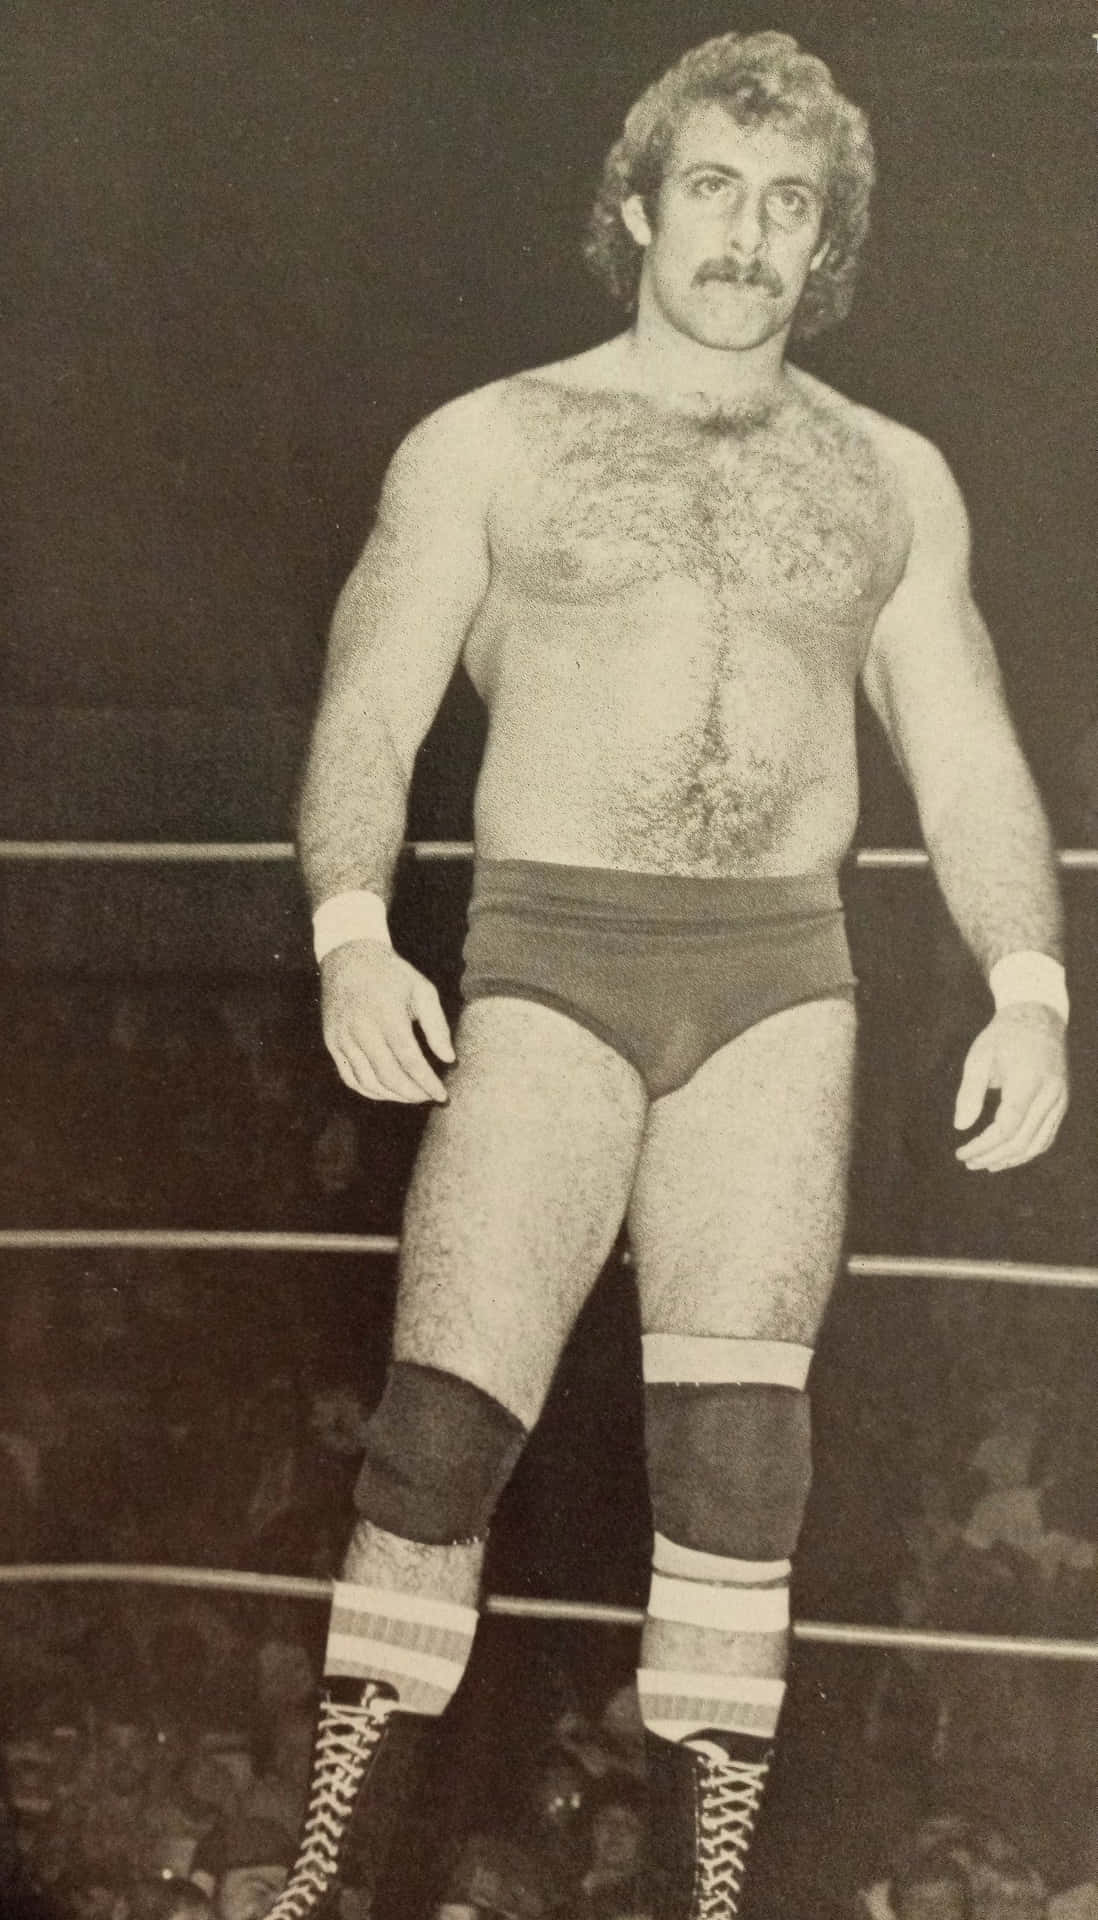 American Wrestler Magnum Ta 1983 Photograph Wallpaper